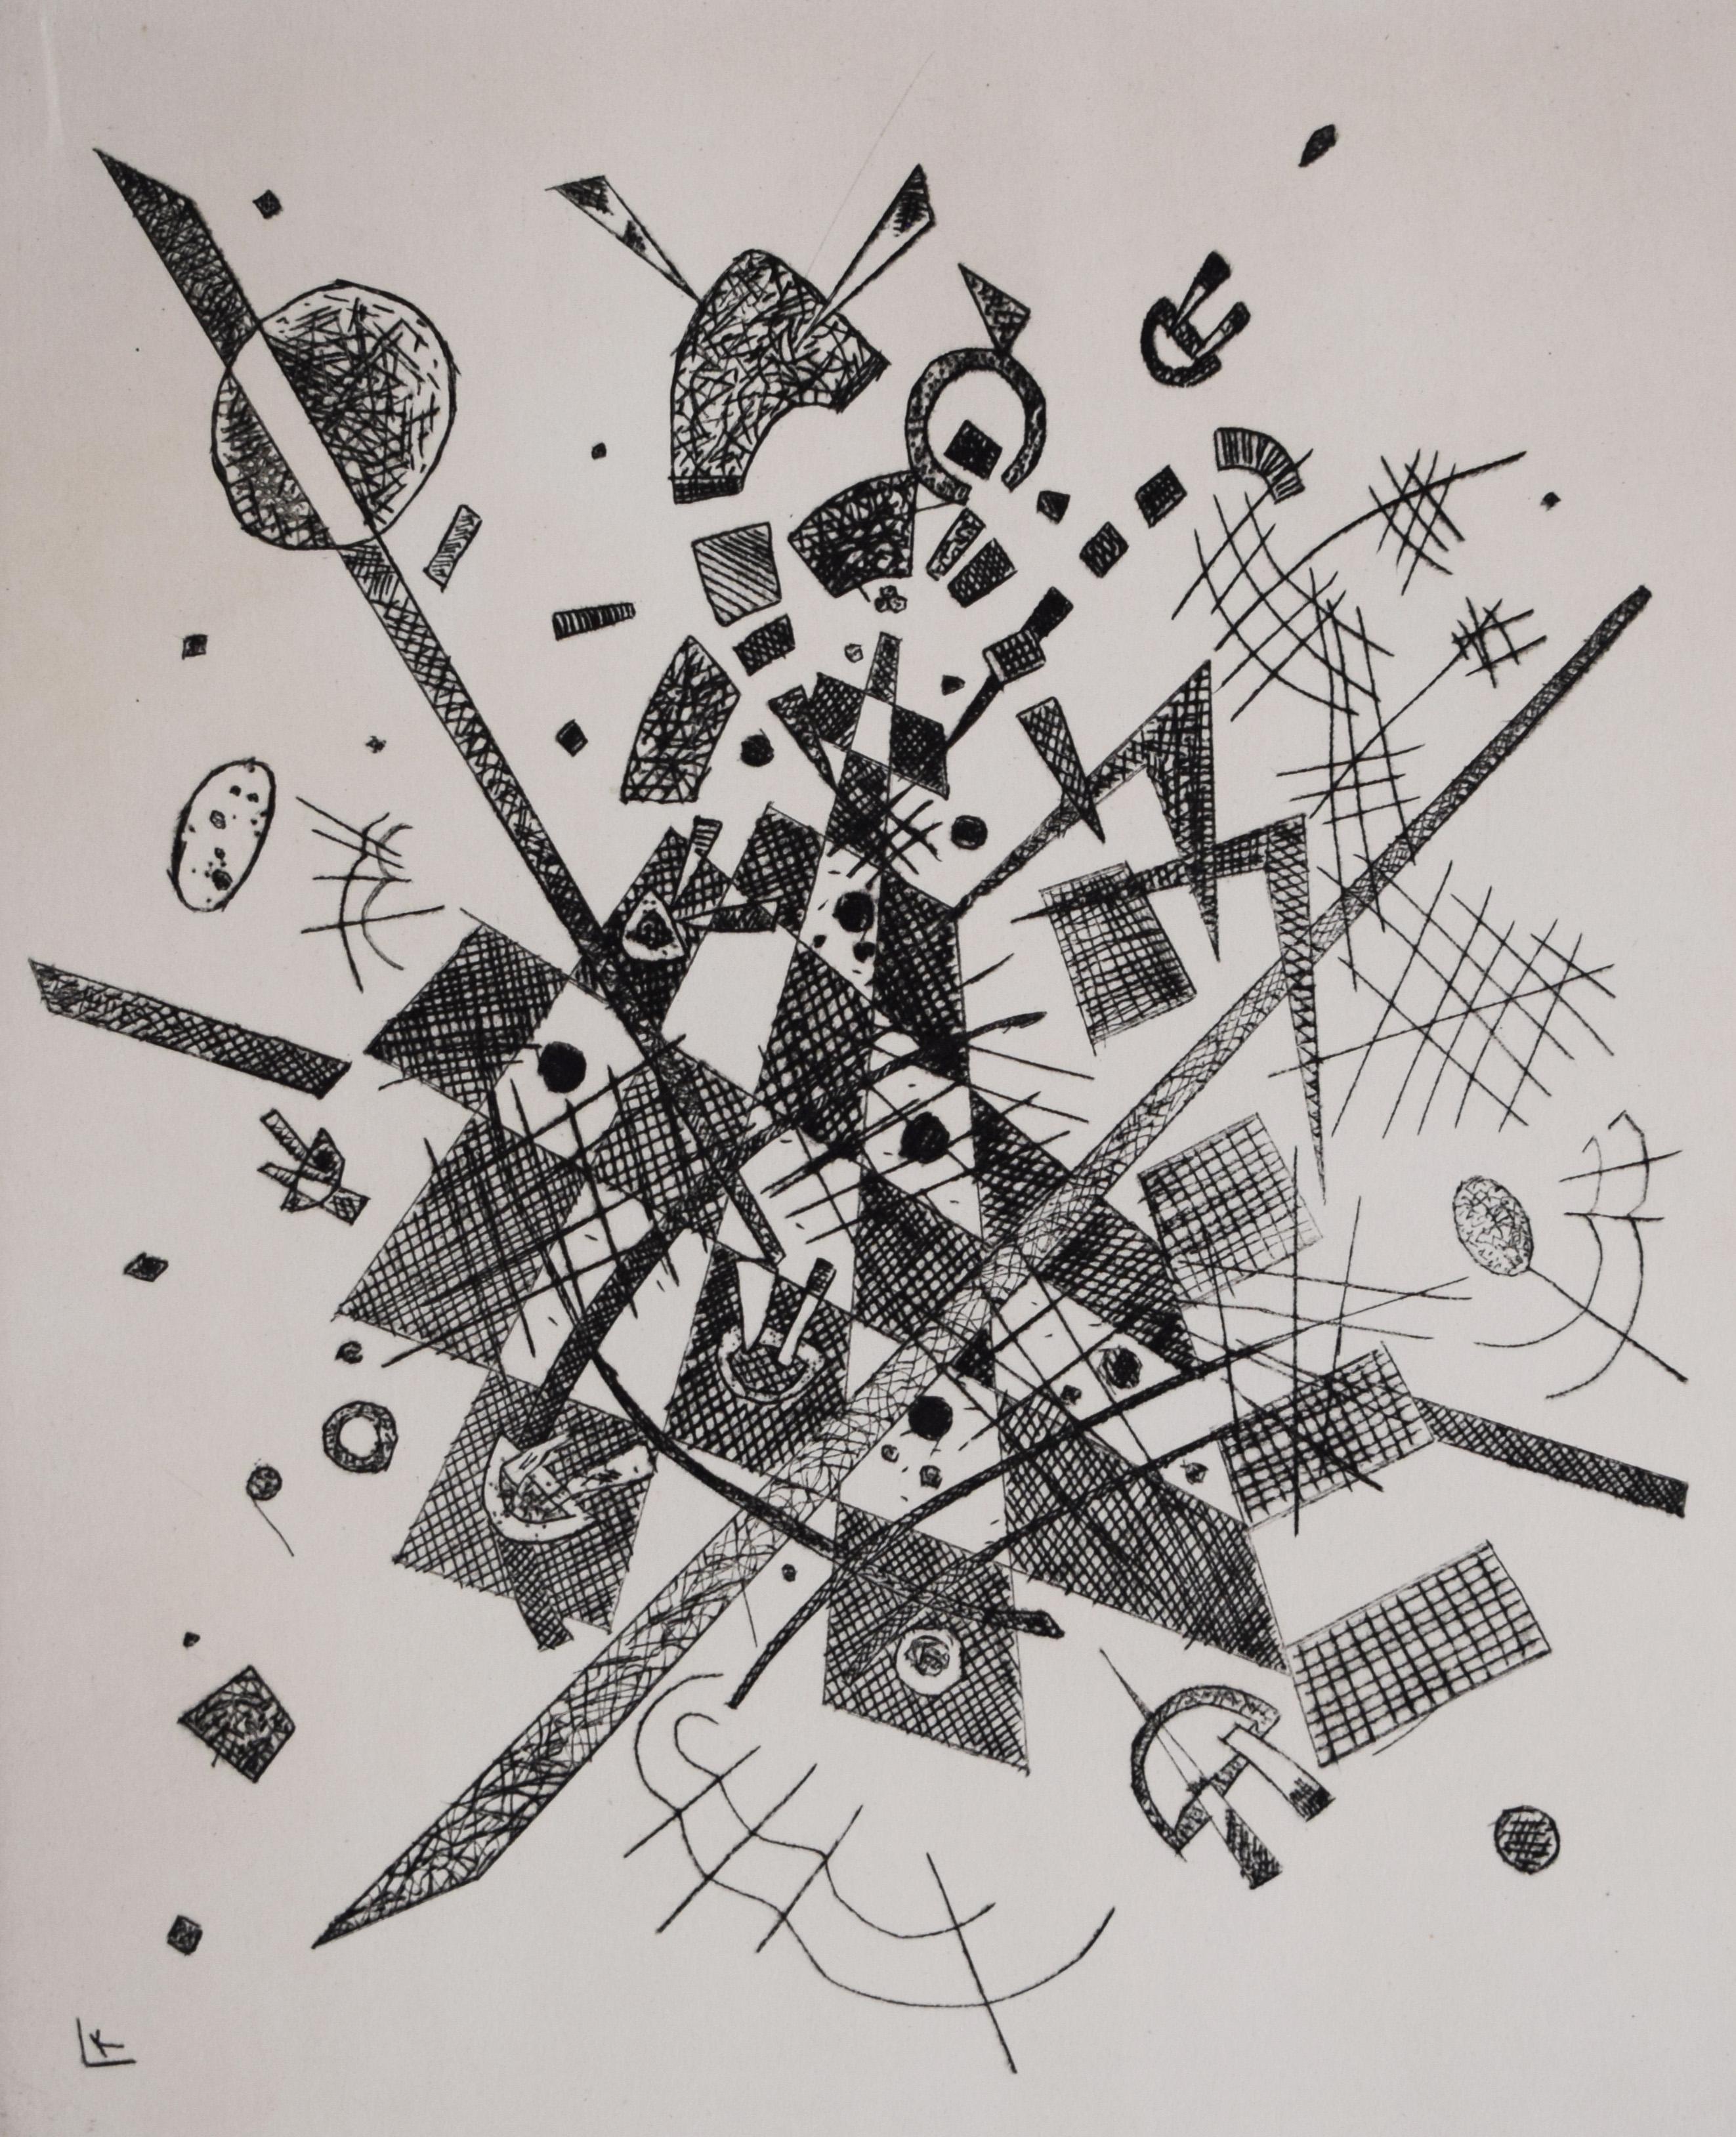 Wassily Kandinsky Abstract Print - Small Worlds IX  Kleine Welten X - German Expressionism Russian